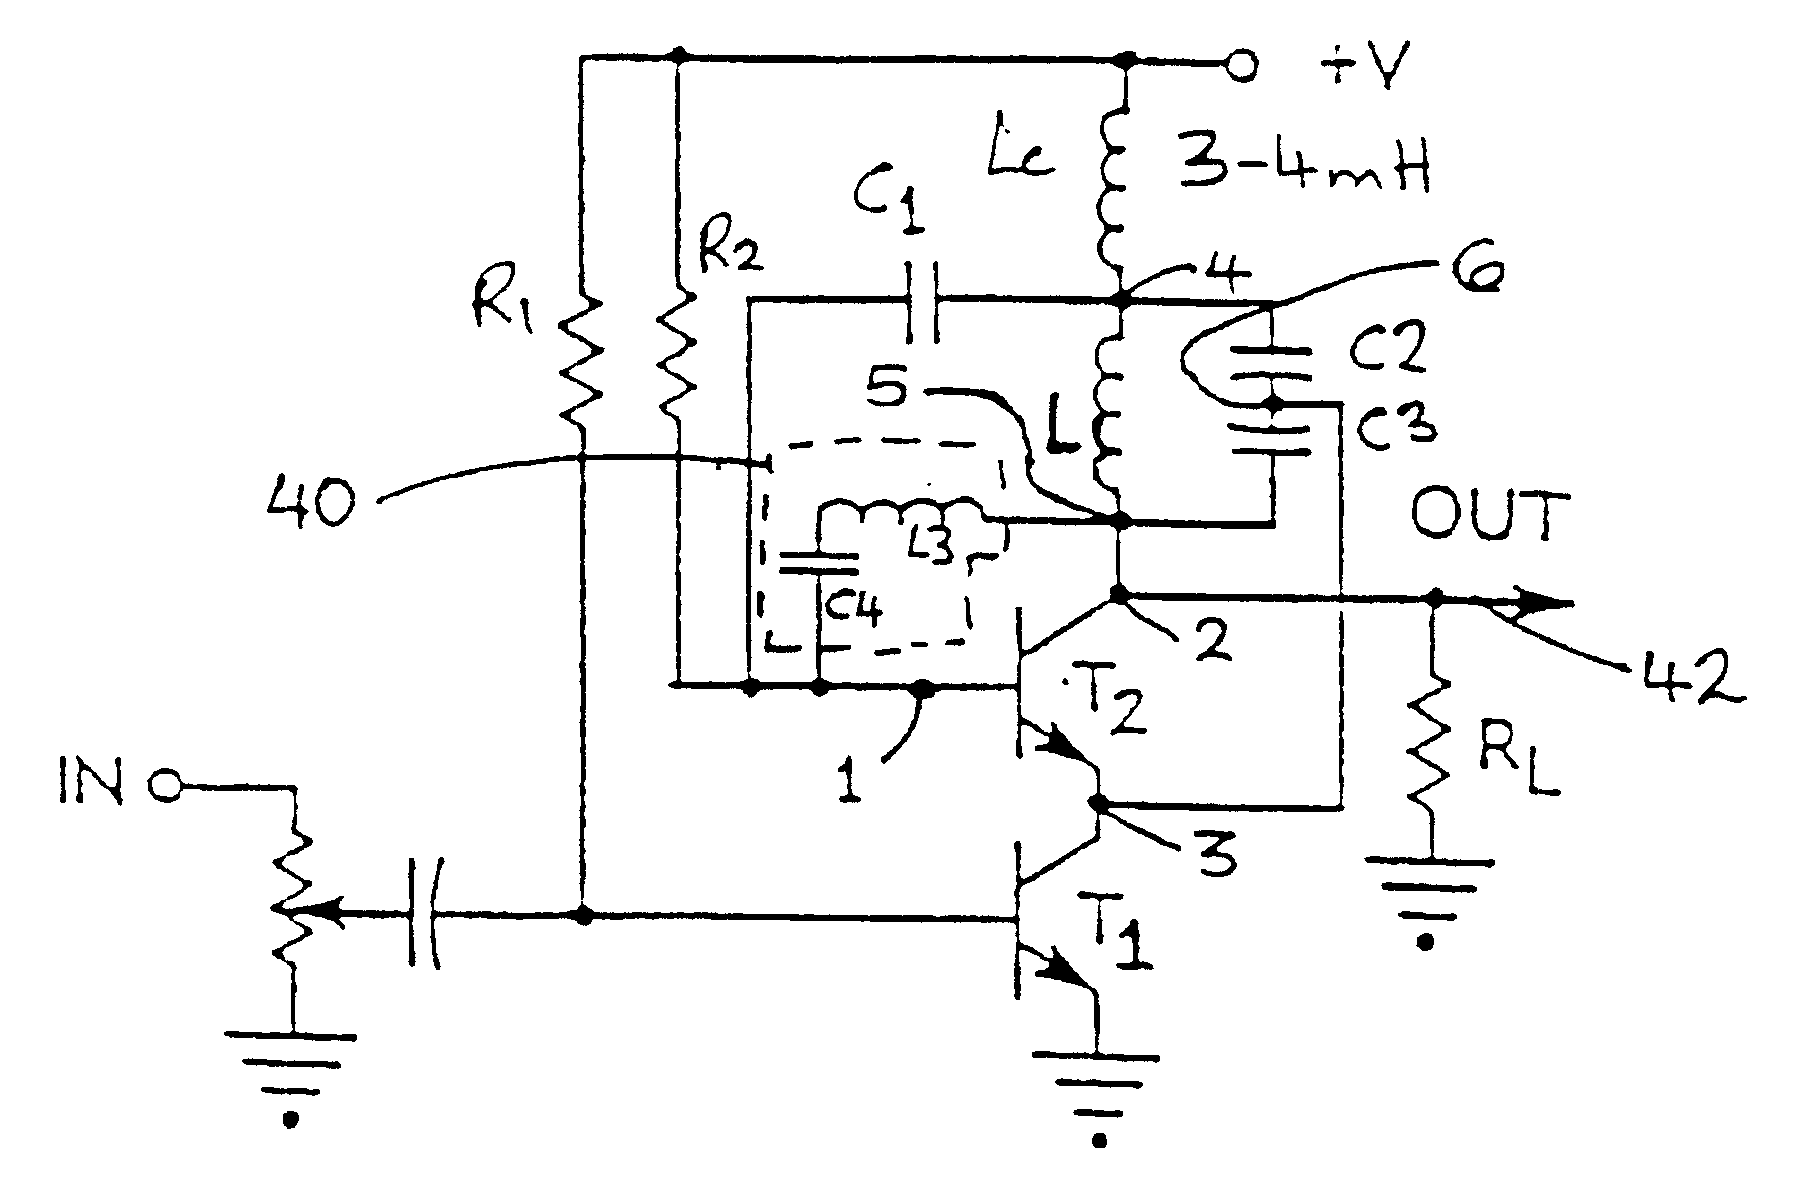 Synchronous oscillators